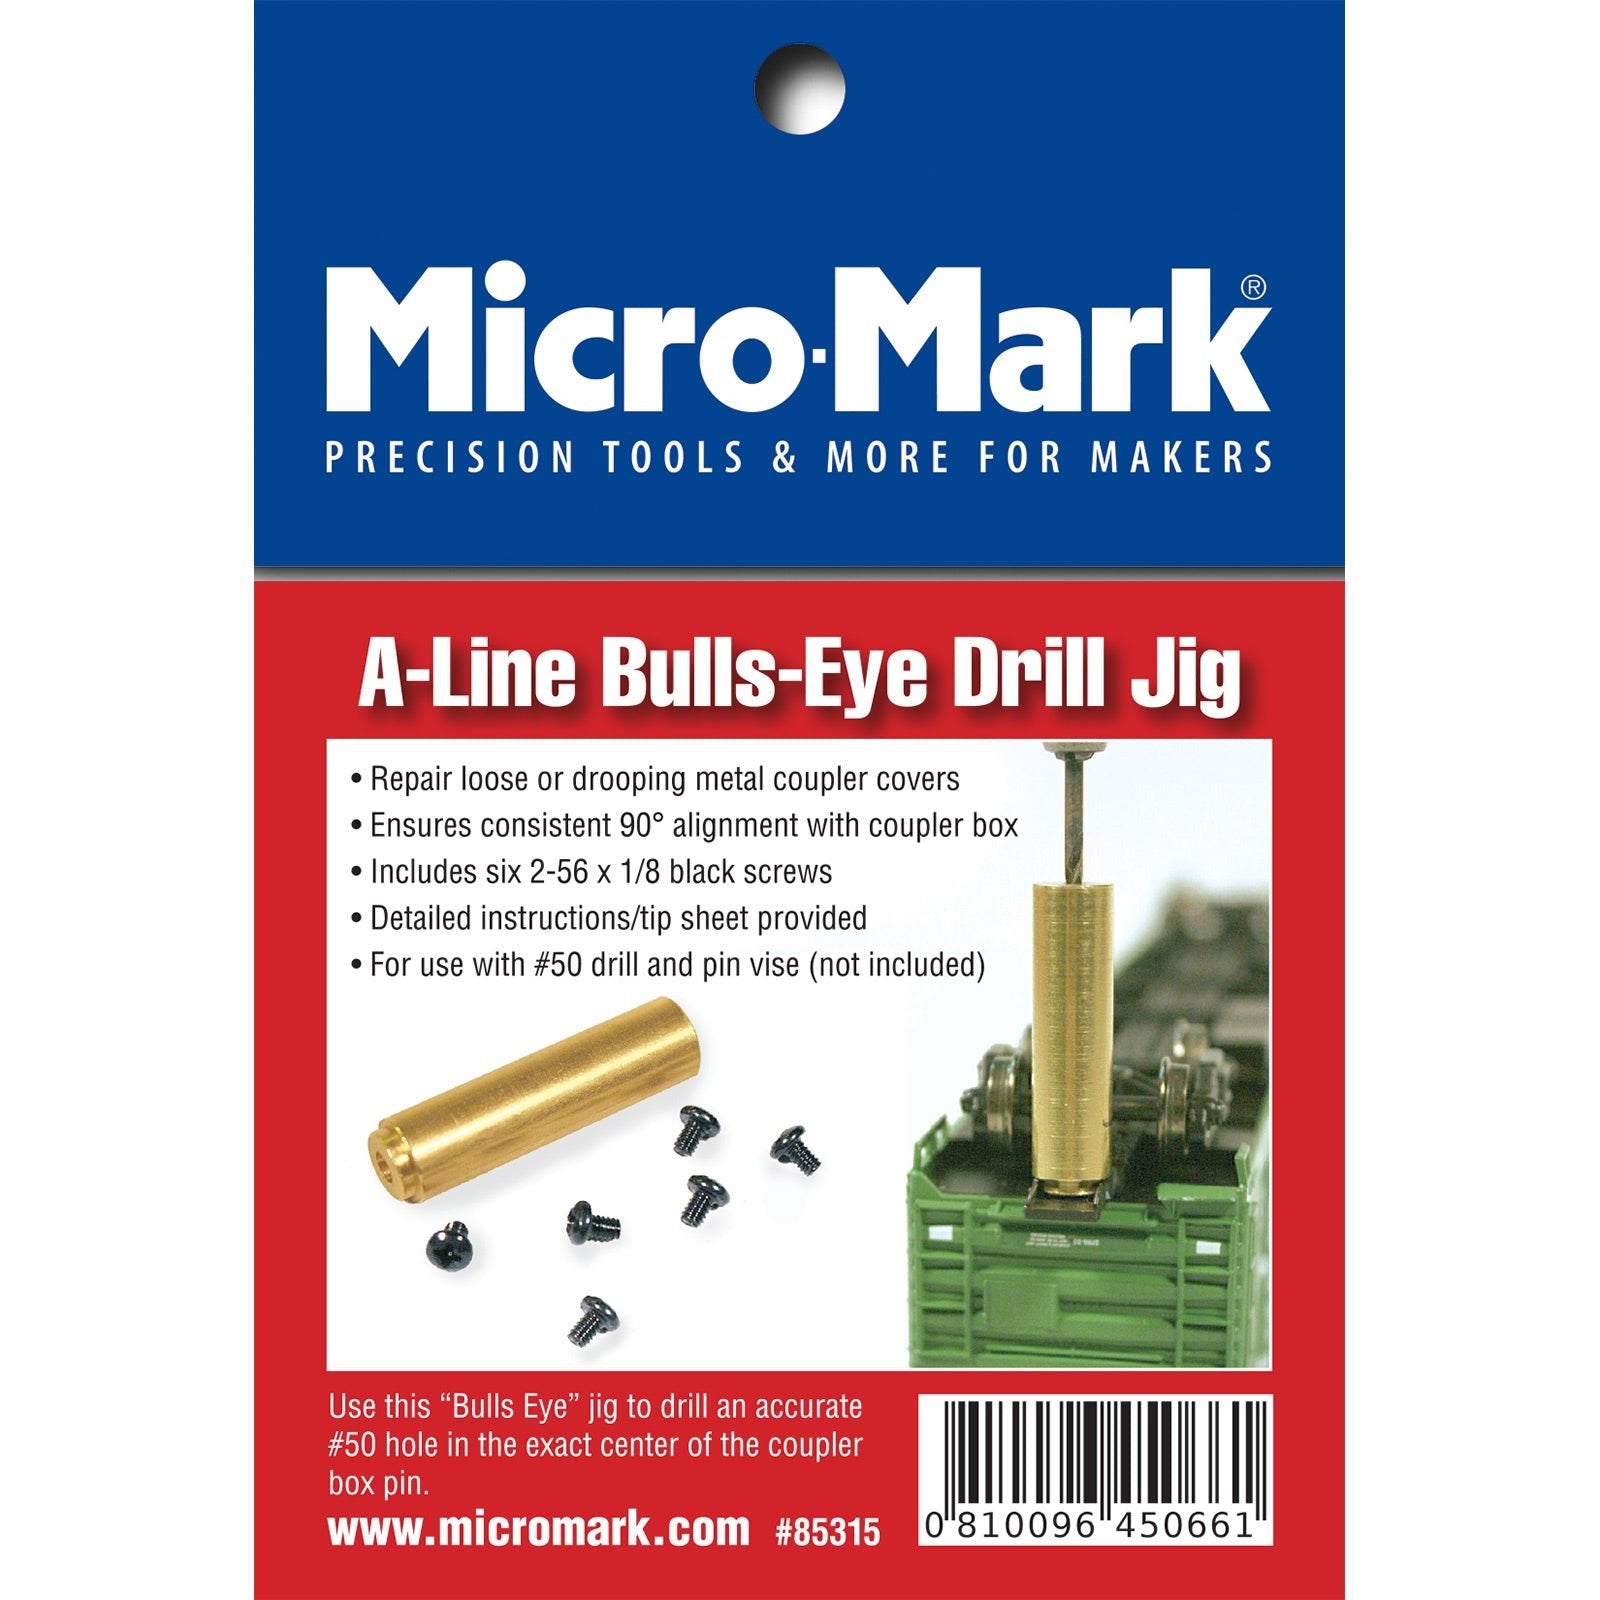 A - Line Bulls Eye Drill Jig and Screws